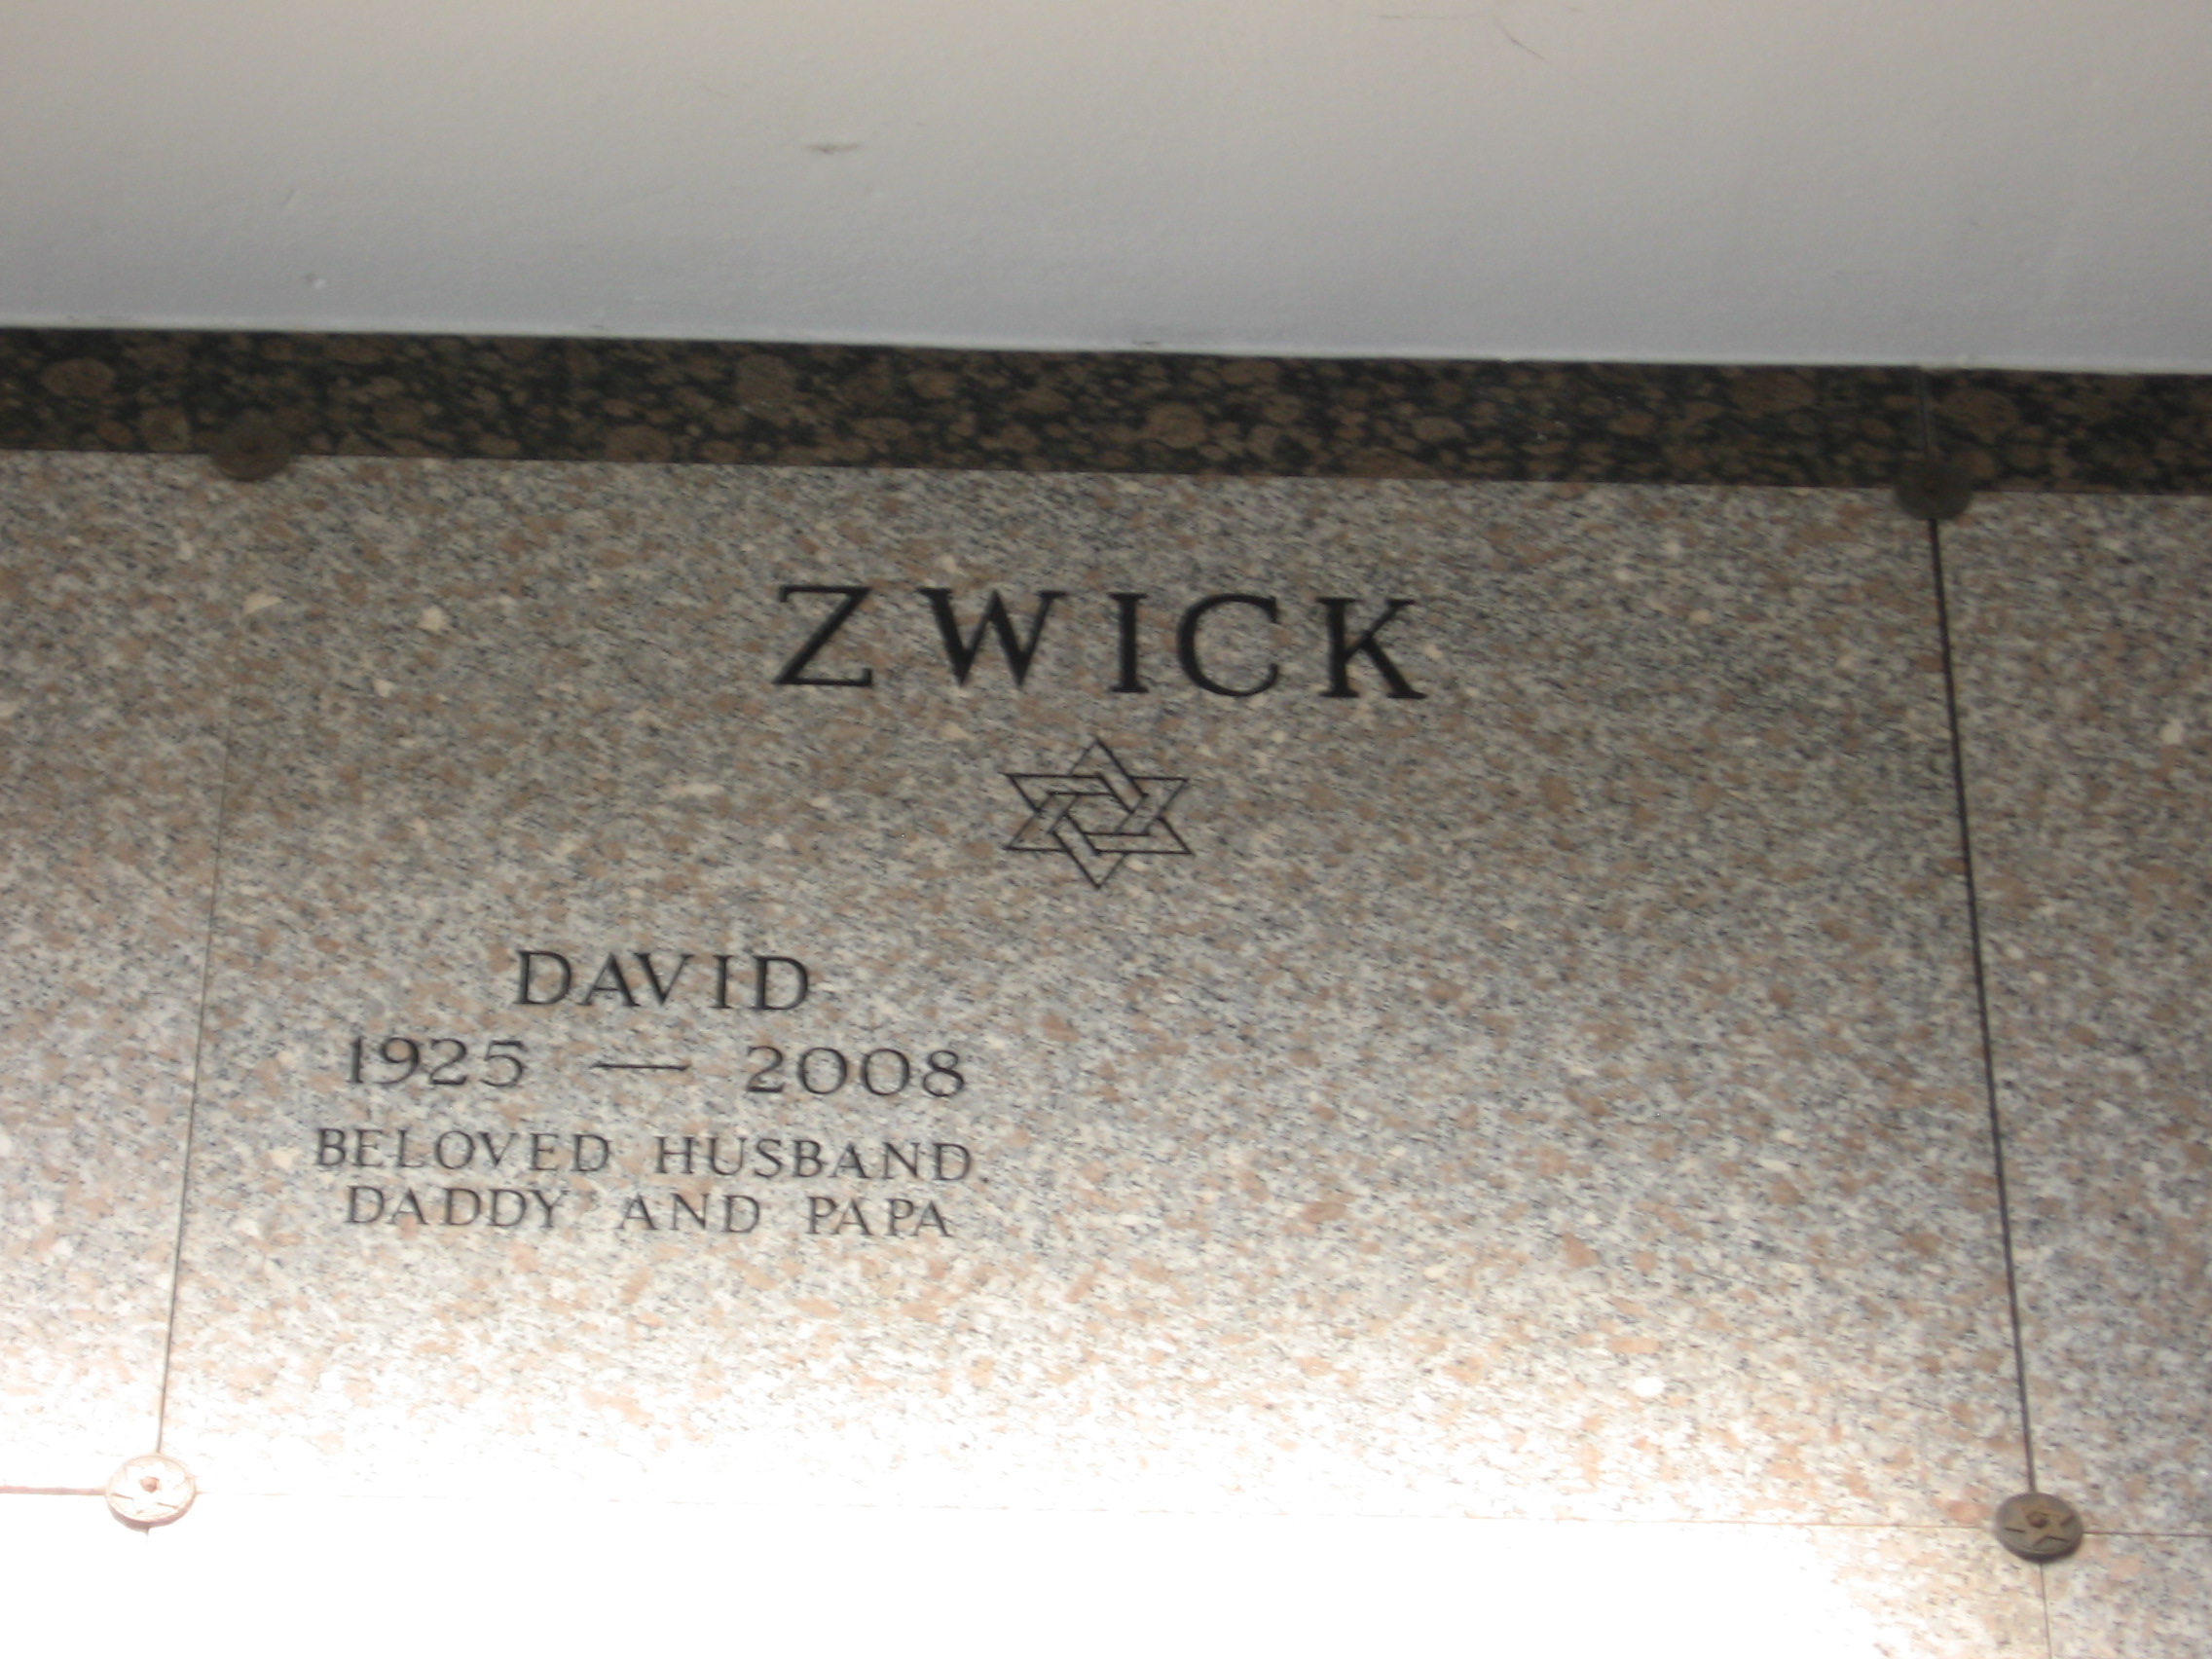 David Zwick